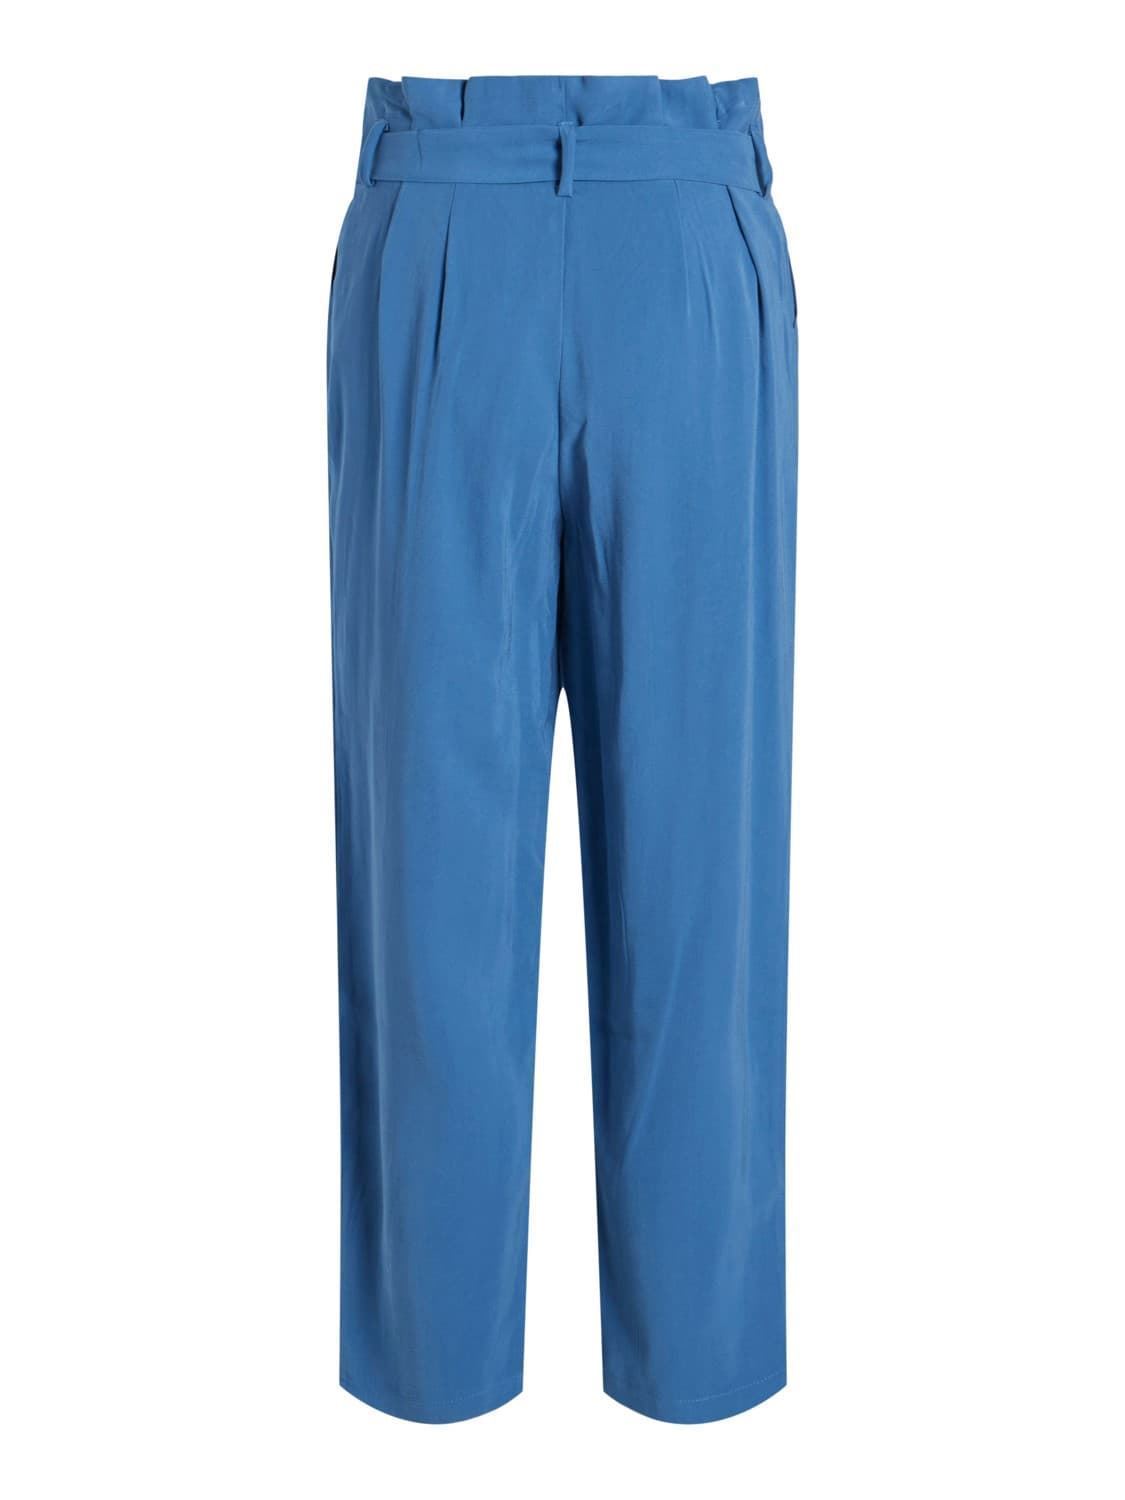 Pantalón azul vikaya - Imagen 4